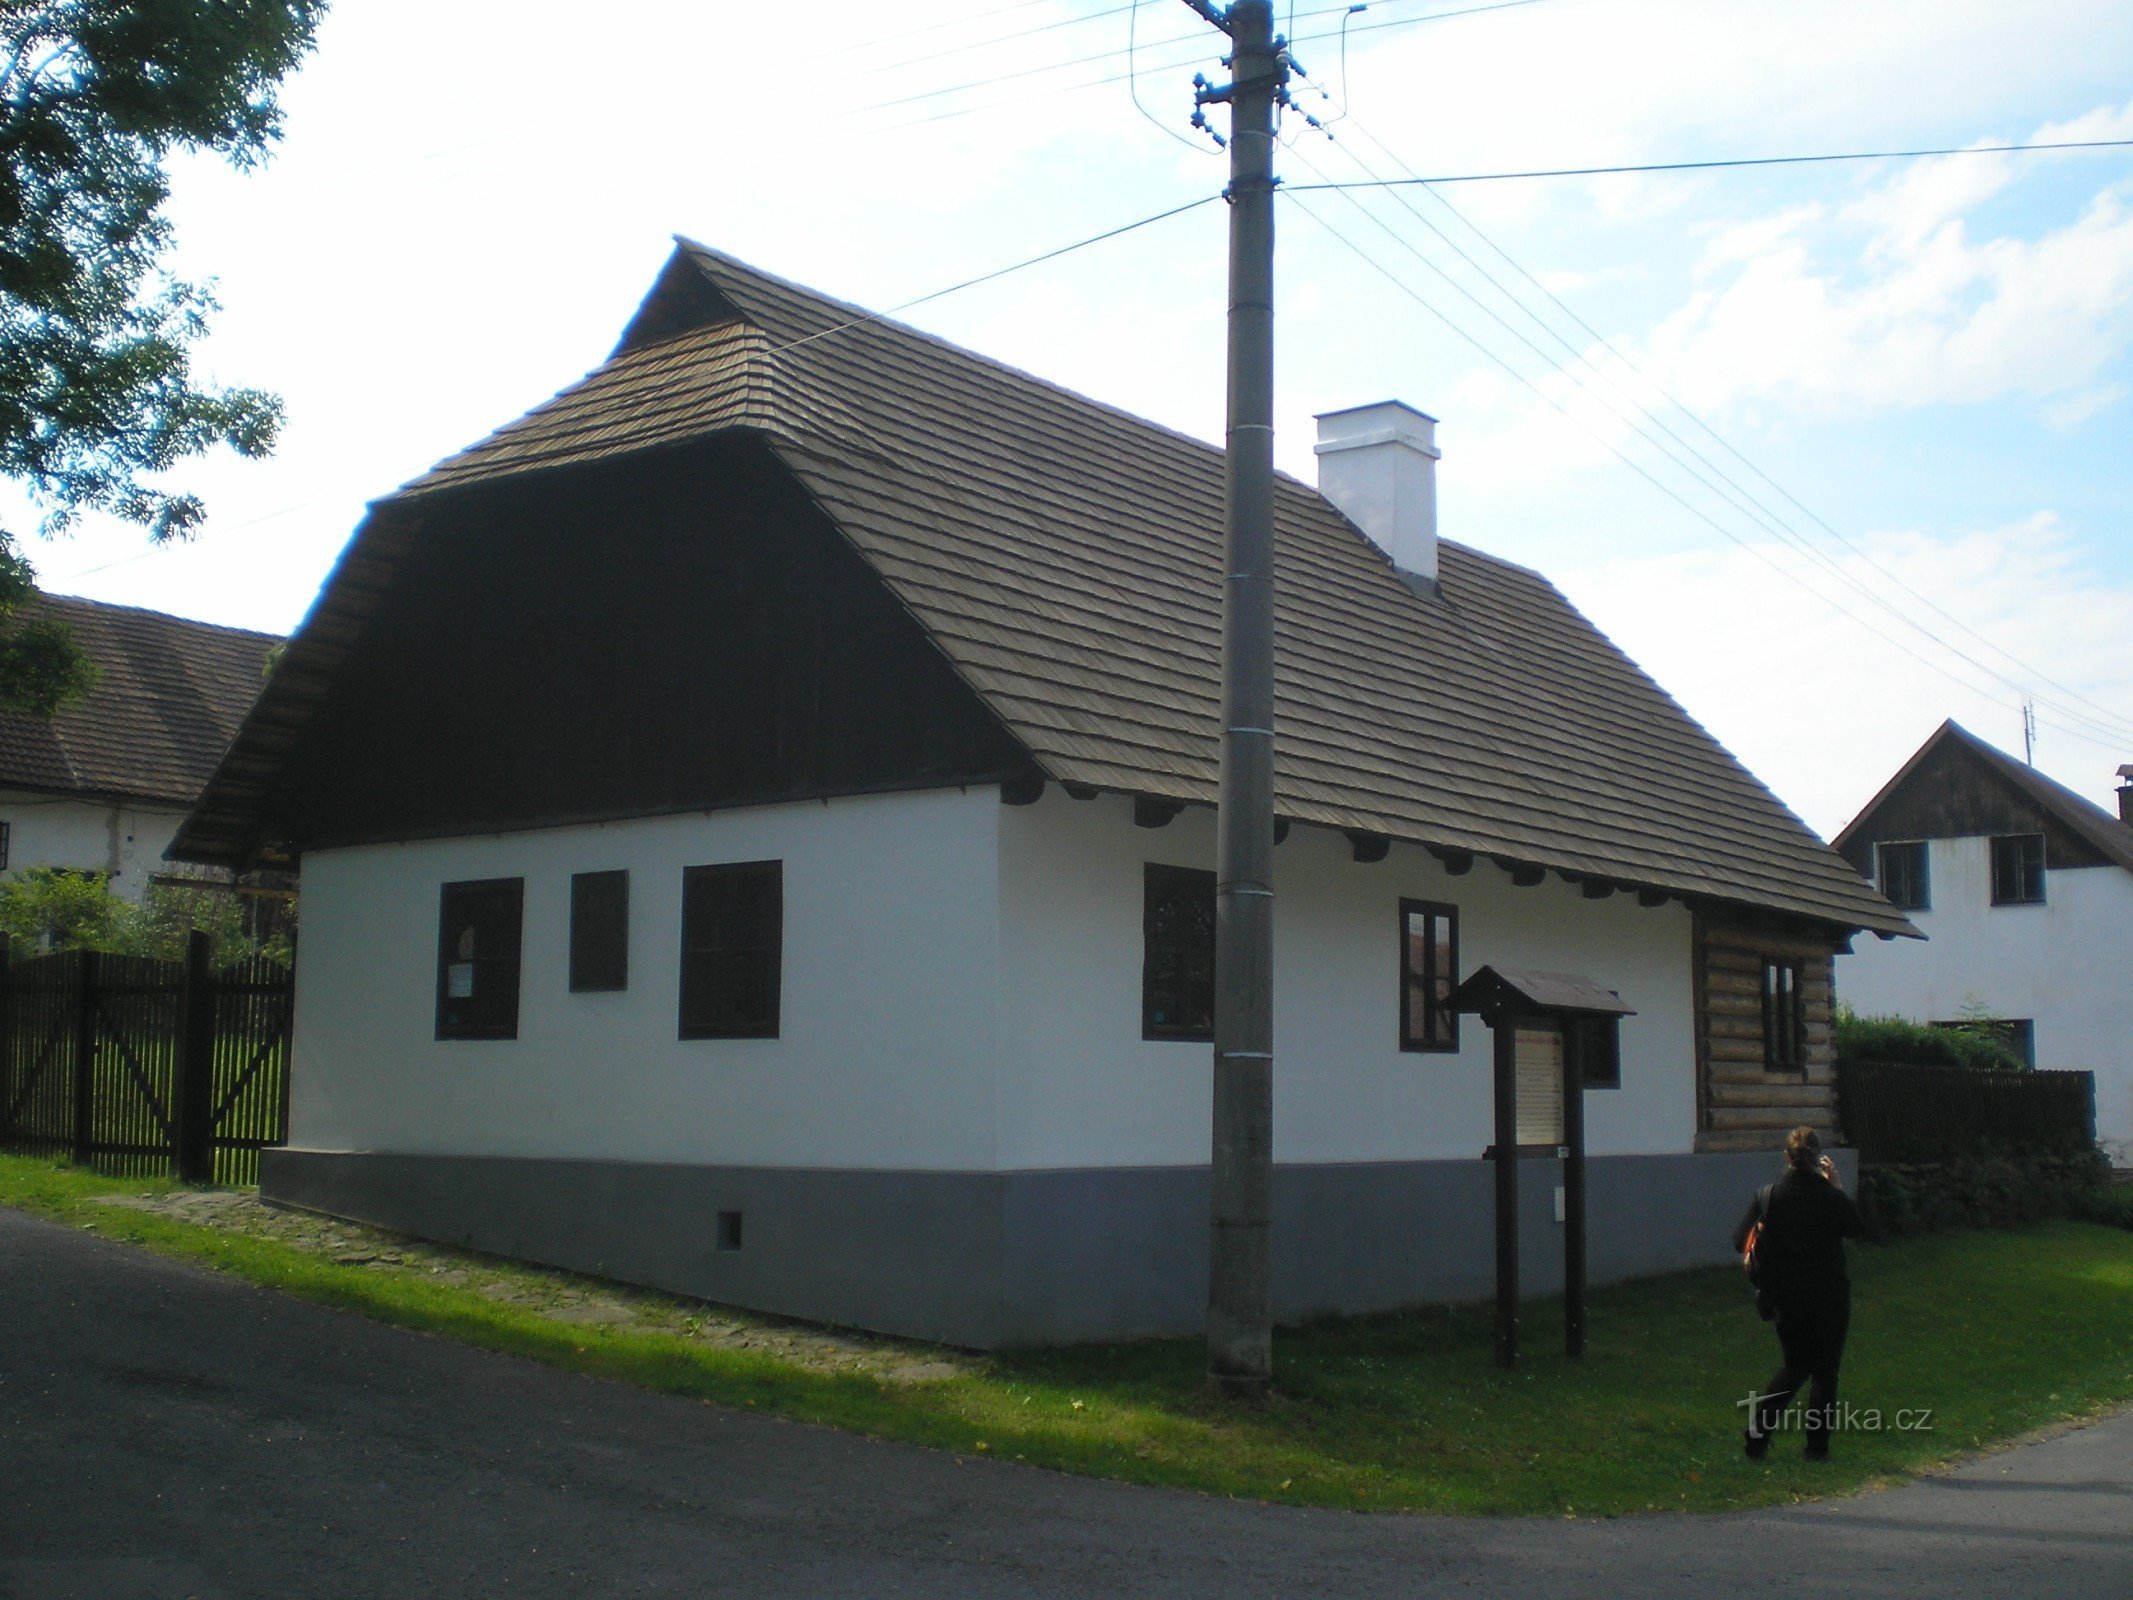 Fødestedet for František Křižík